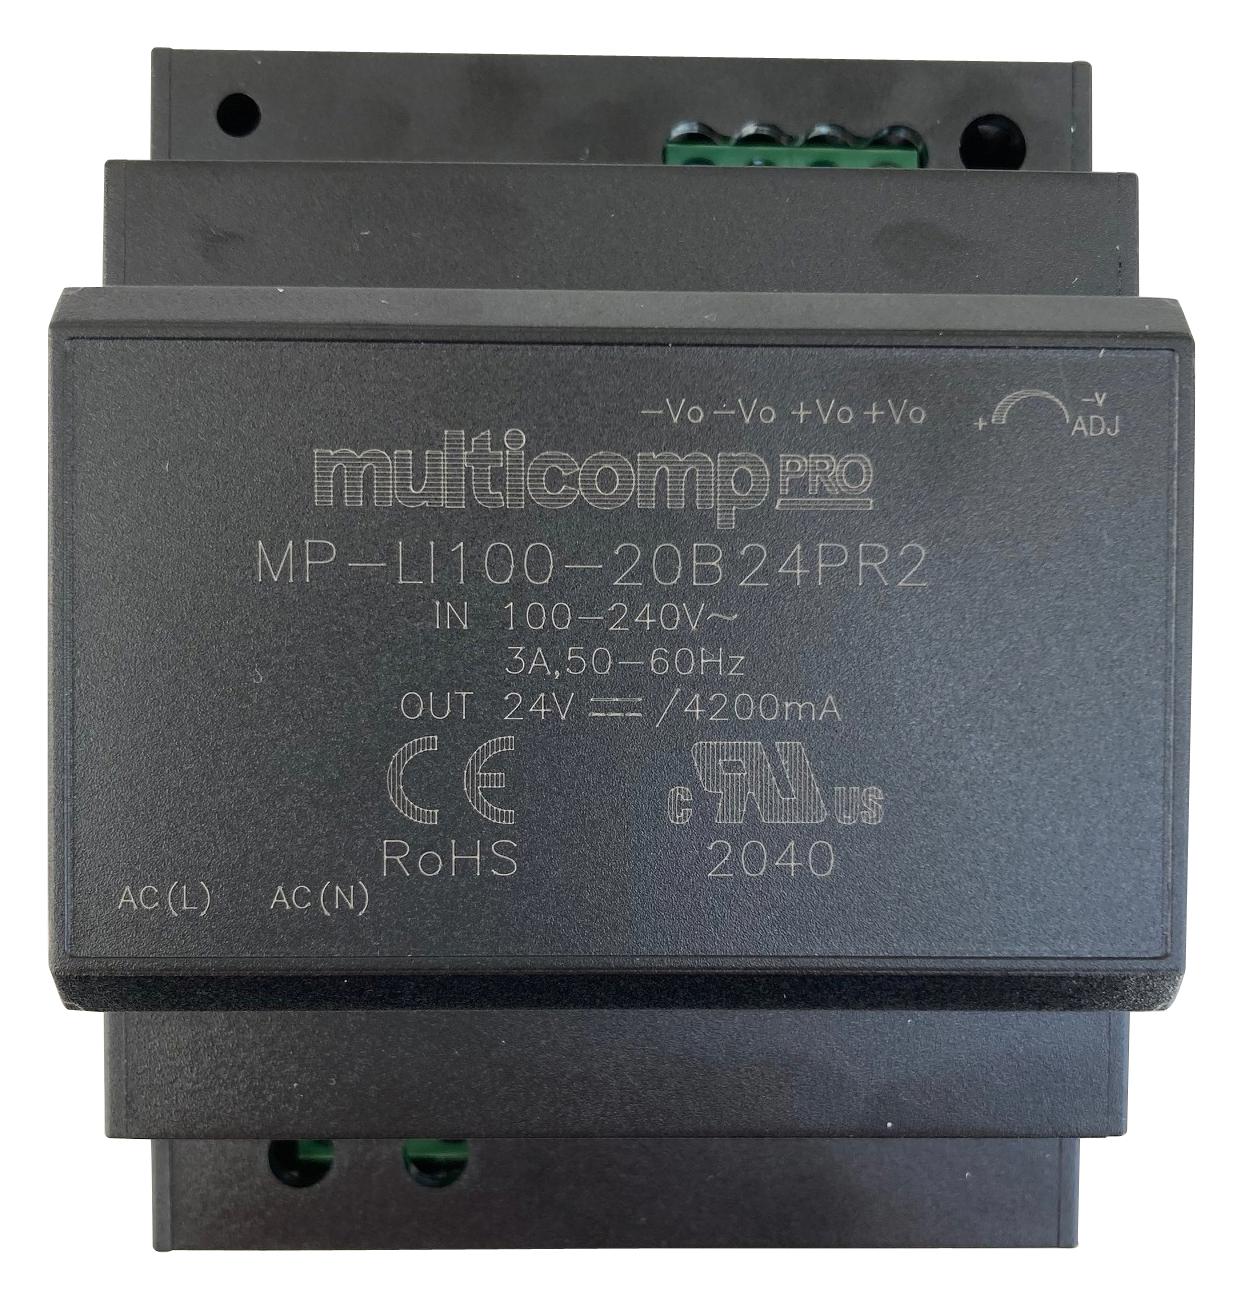 MP-LI100-20B24PR2 POWER SUPPLY, AC-DC, 24V, 4.2A MULTICOMP PRO